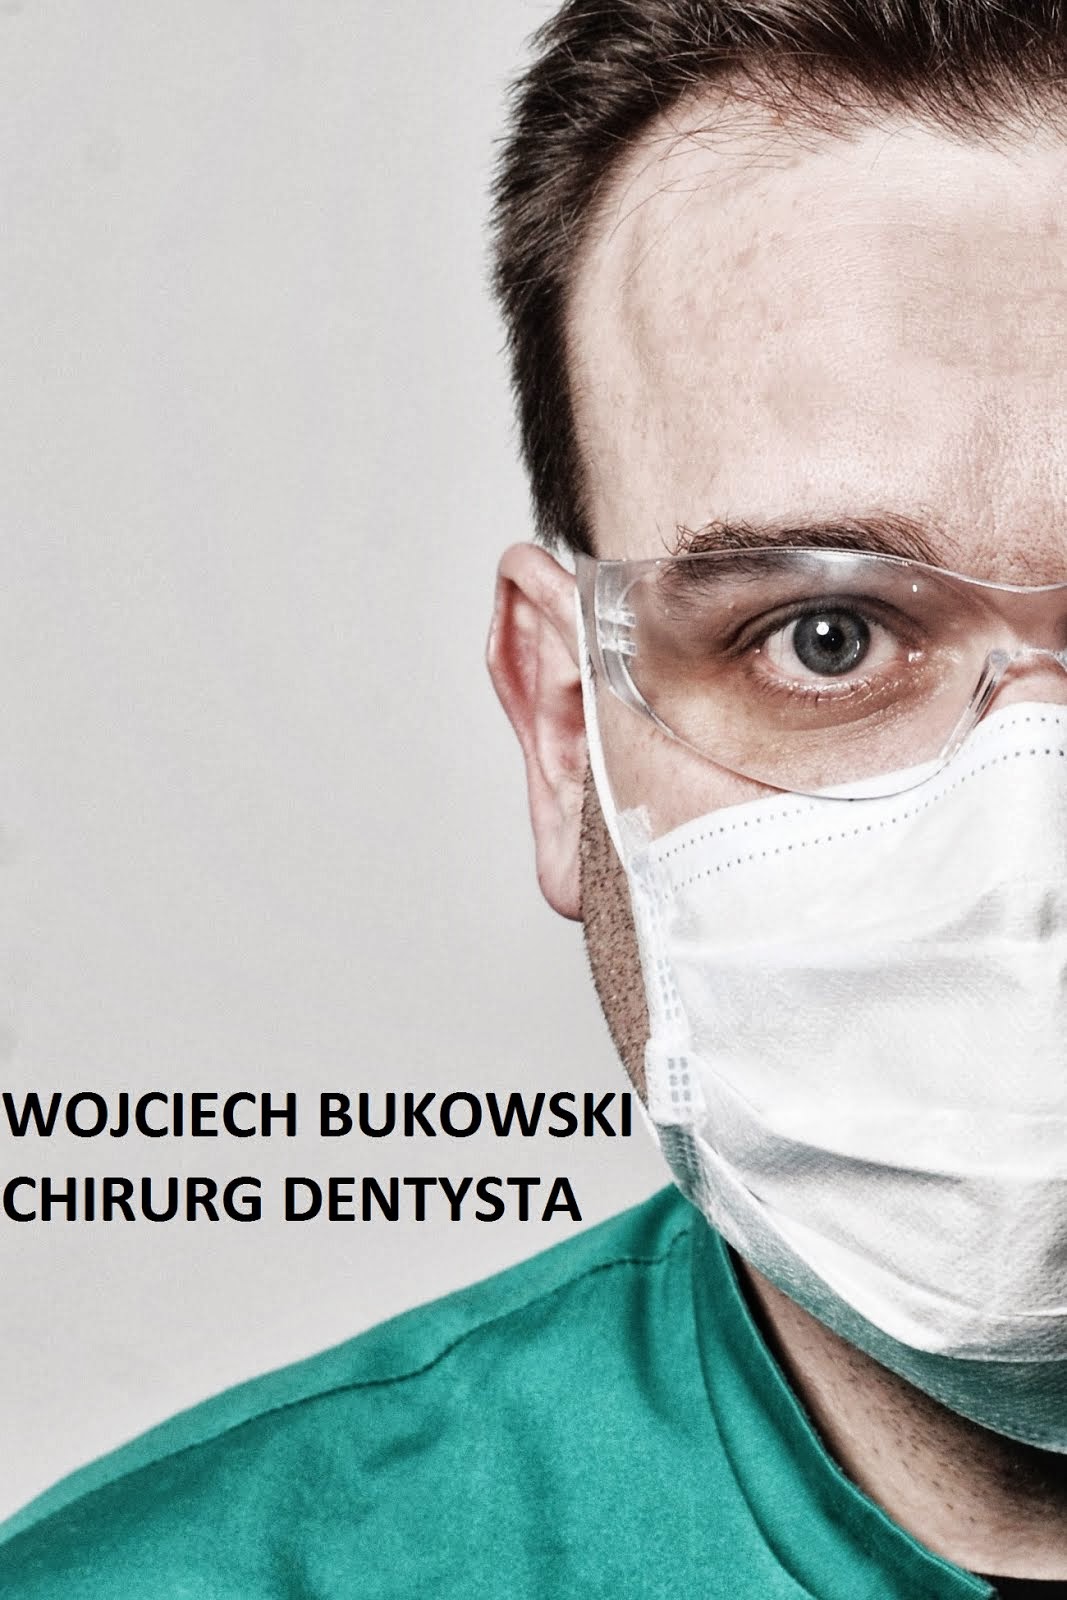 Wojciech Bukowski  chirurg dentysta